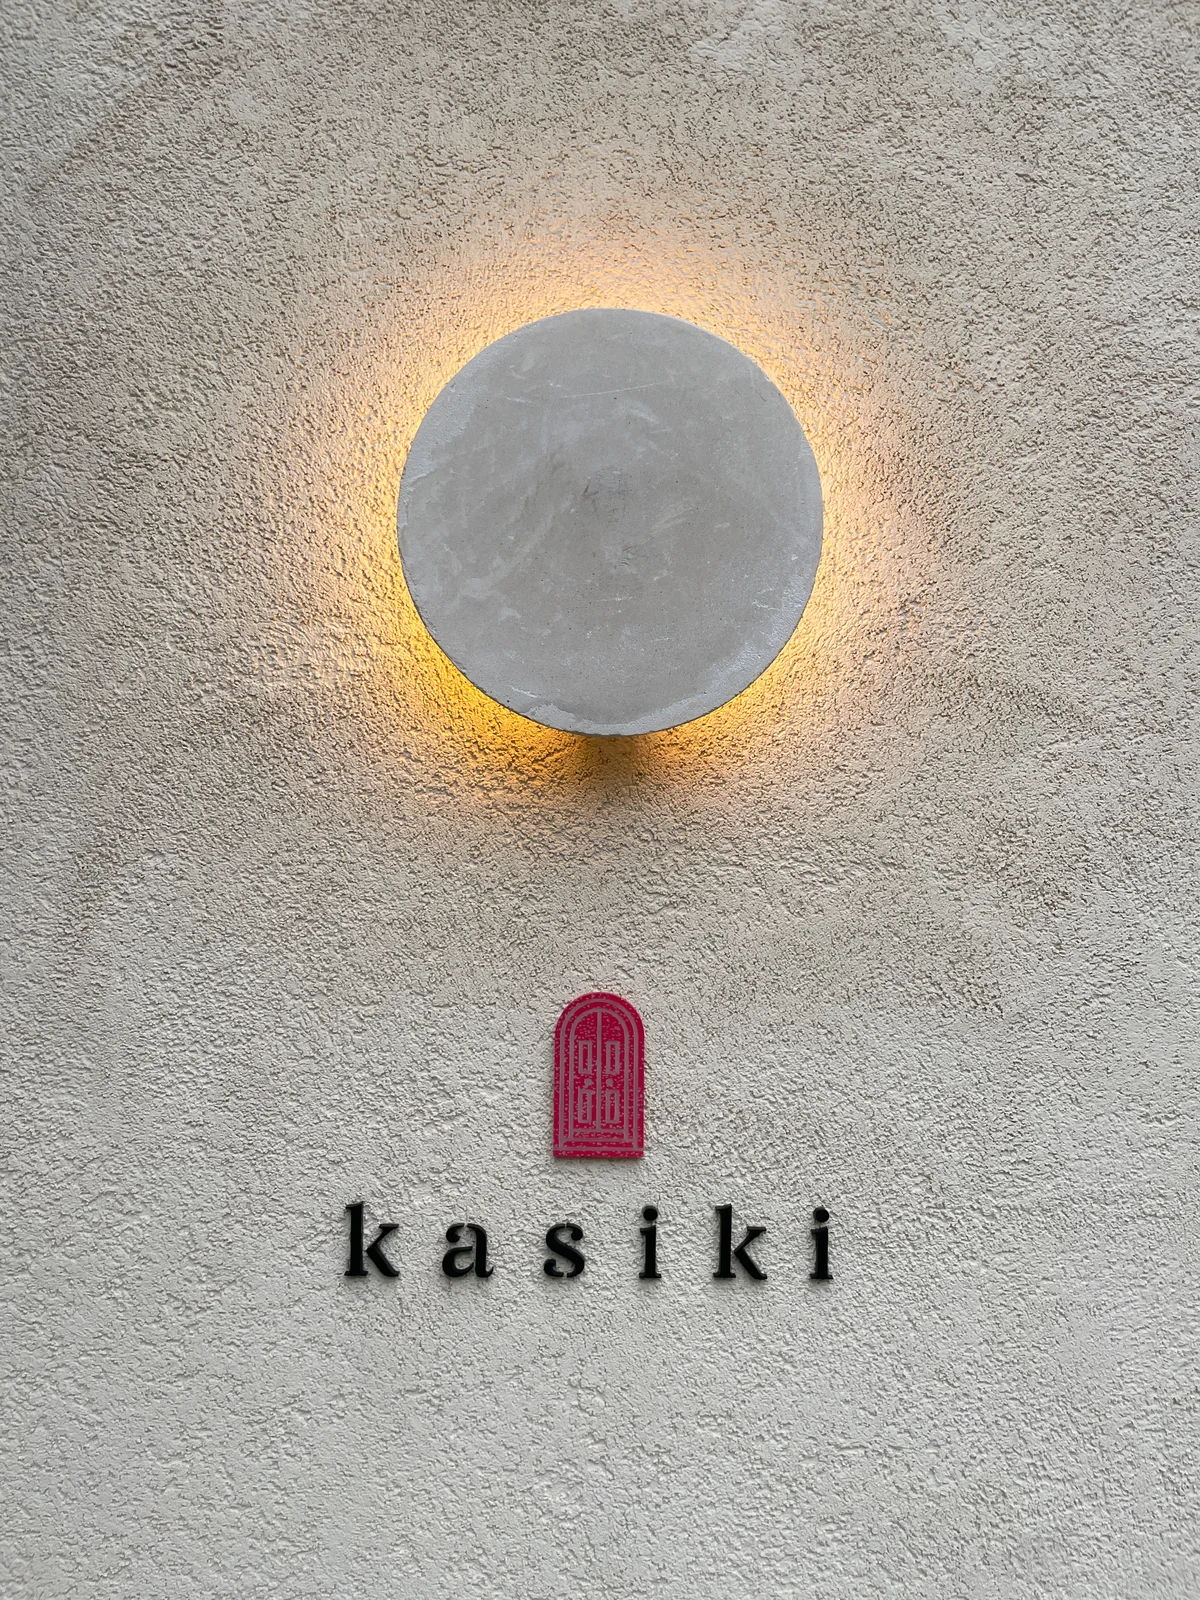 kasikiのお店のライト写真